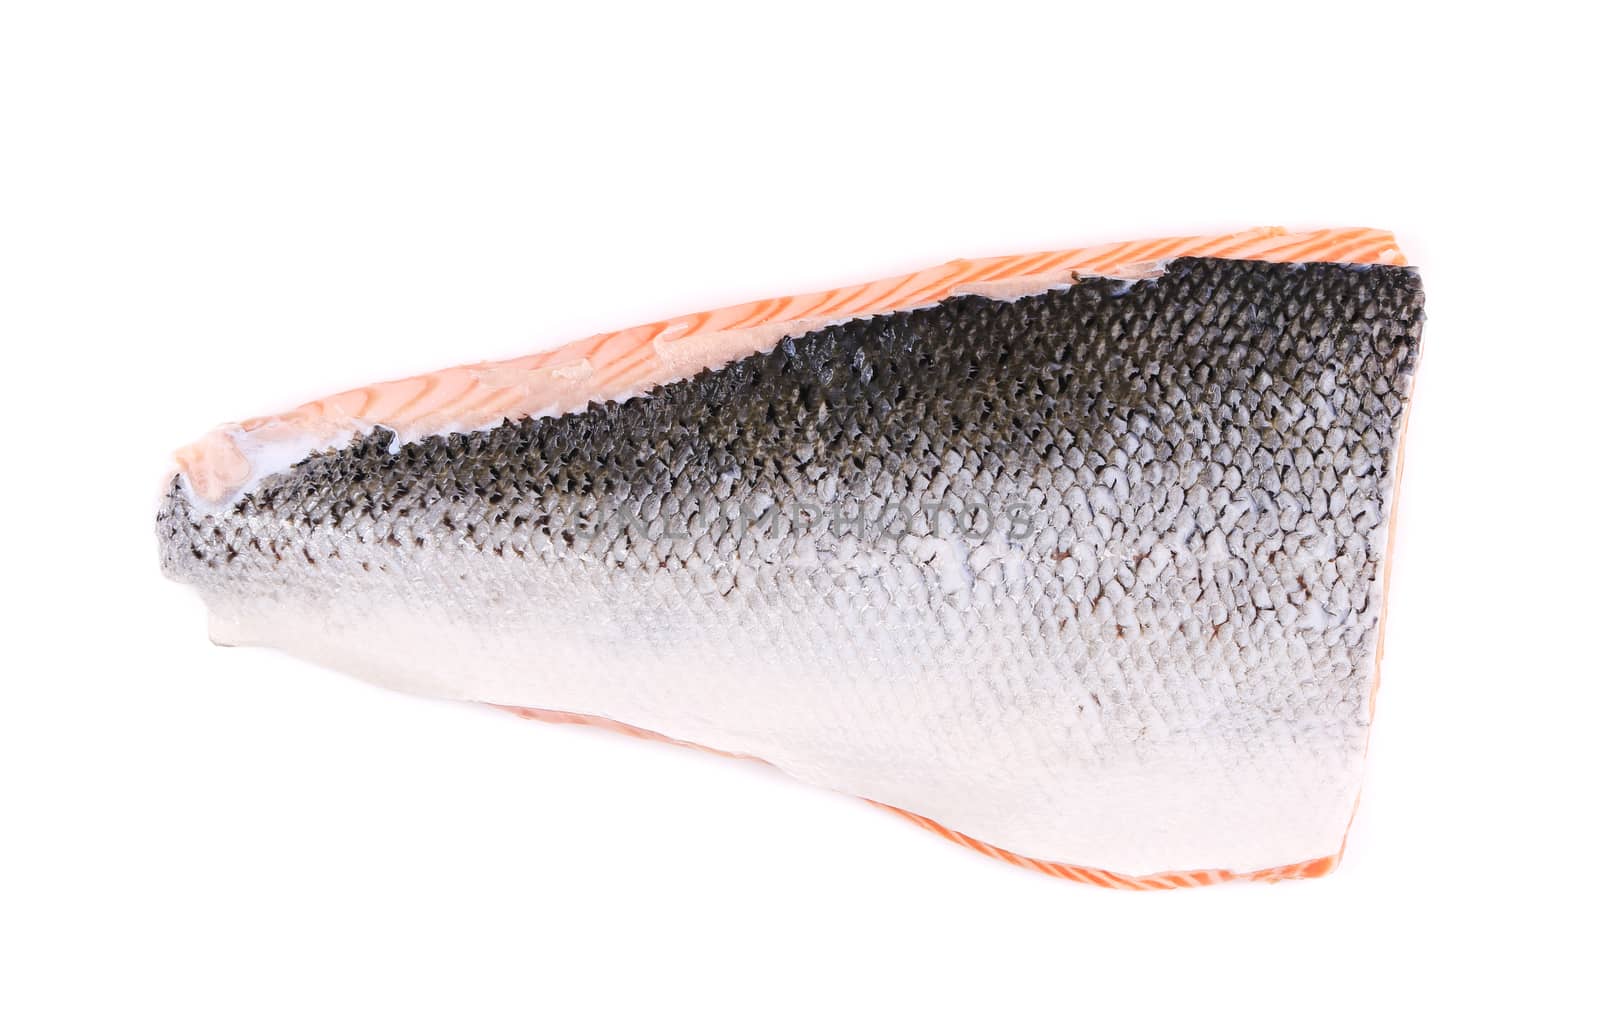 Raw salmon fillet. by indigolotos